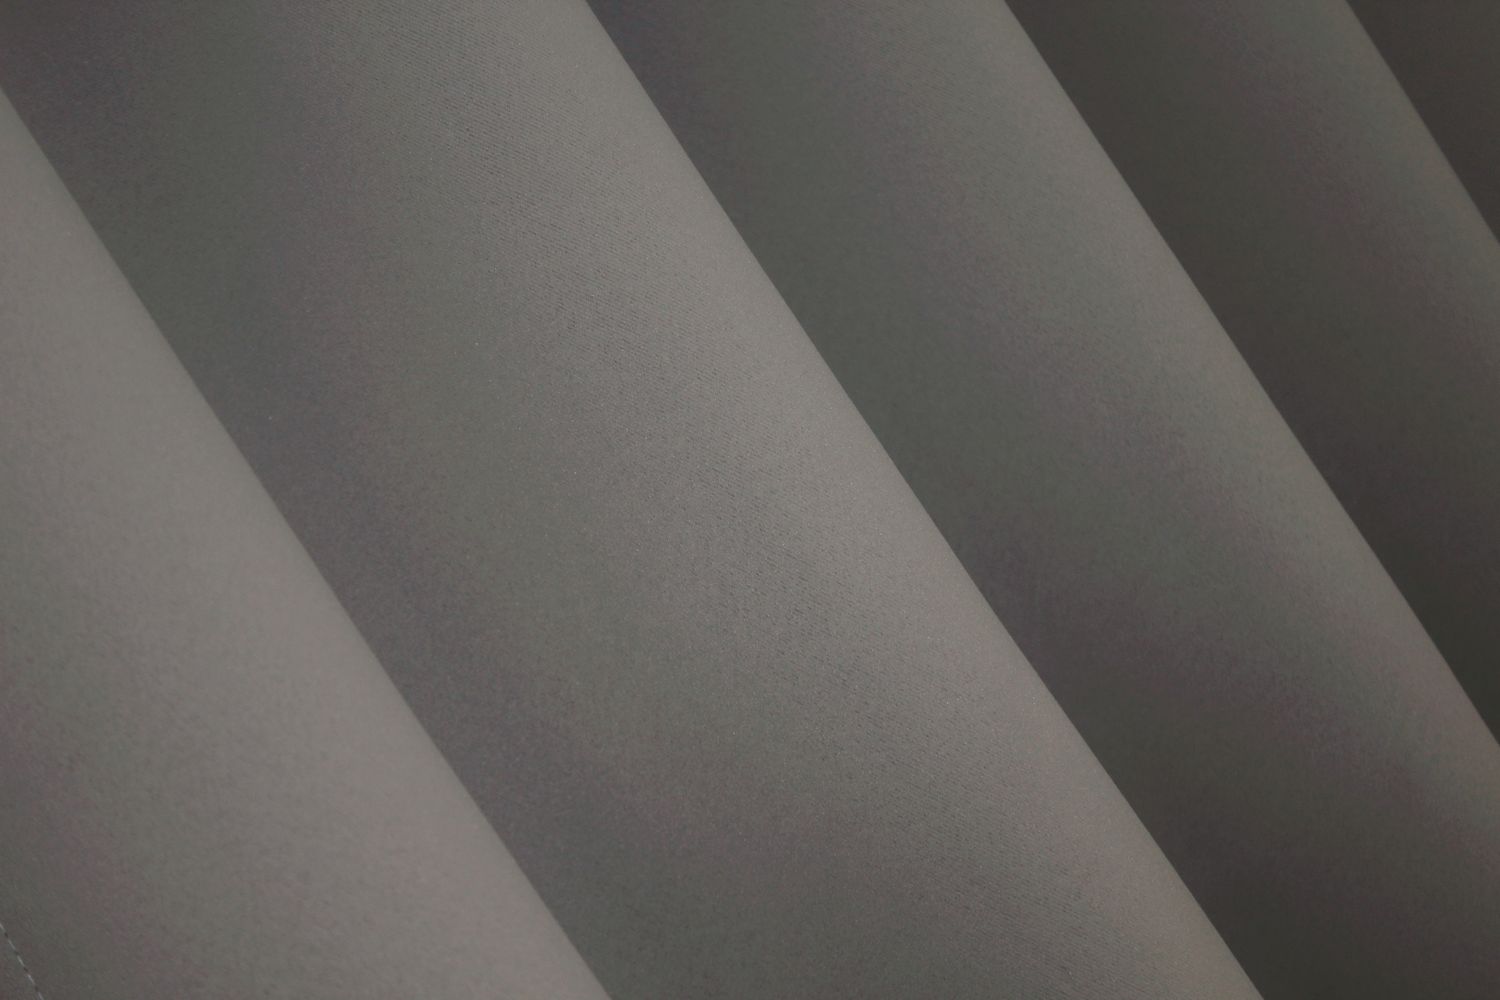 Комплект штор из ткани блэкаут "Fusion Dimout" цвет серый 832ш, Серый, Комплект коротких штор (2 шт. 1,3х1,7м.), Классические, Короткие, 1,3 м., 1,7 м., 130, 170, 1,5 - 2,5 м., В комплекте 2 шт., Тесьма